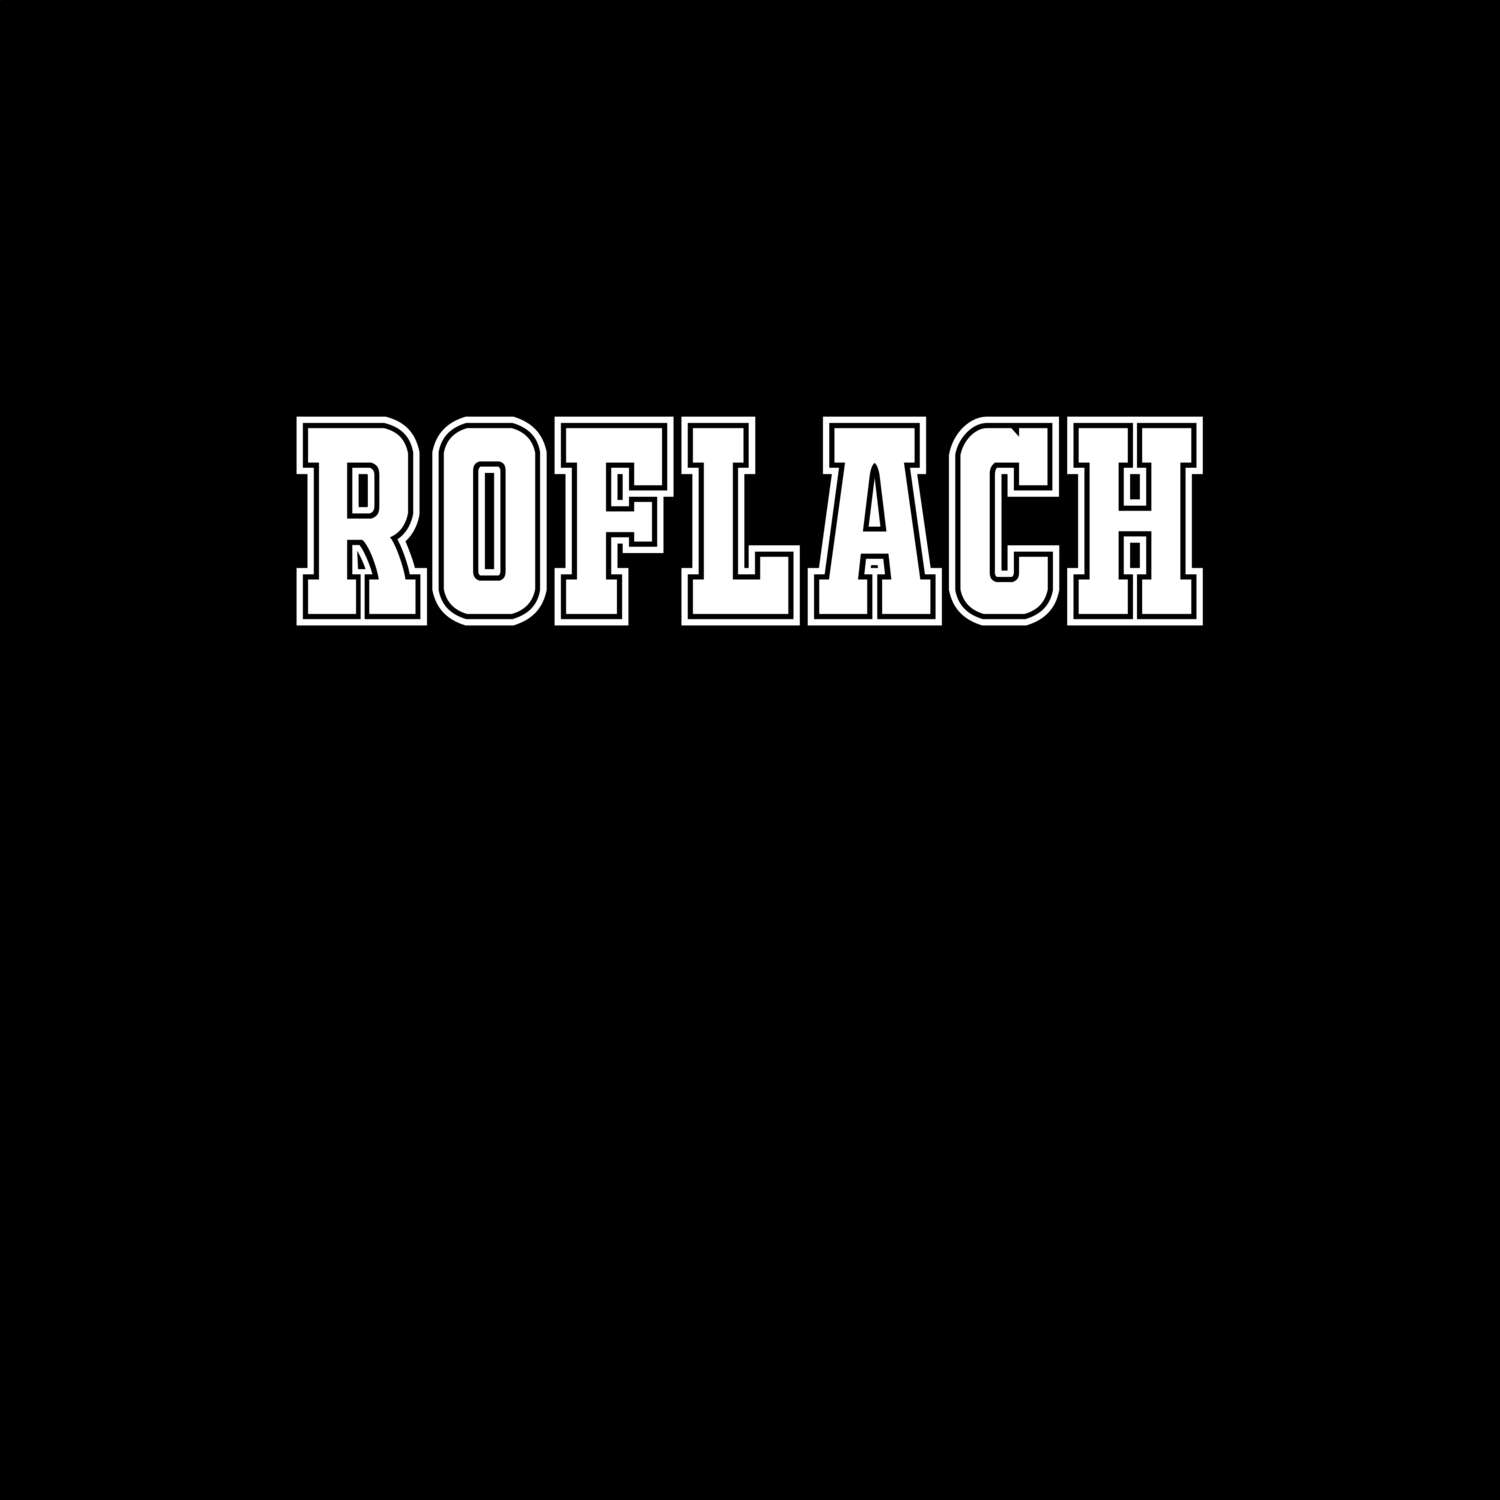 Roflach T-Shirt »Classic«